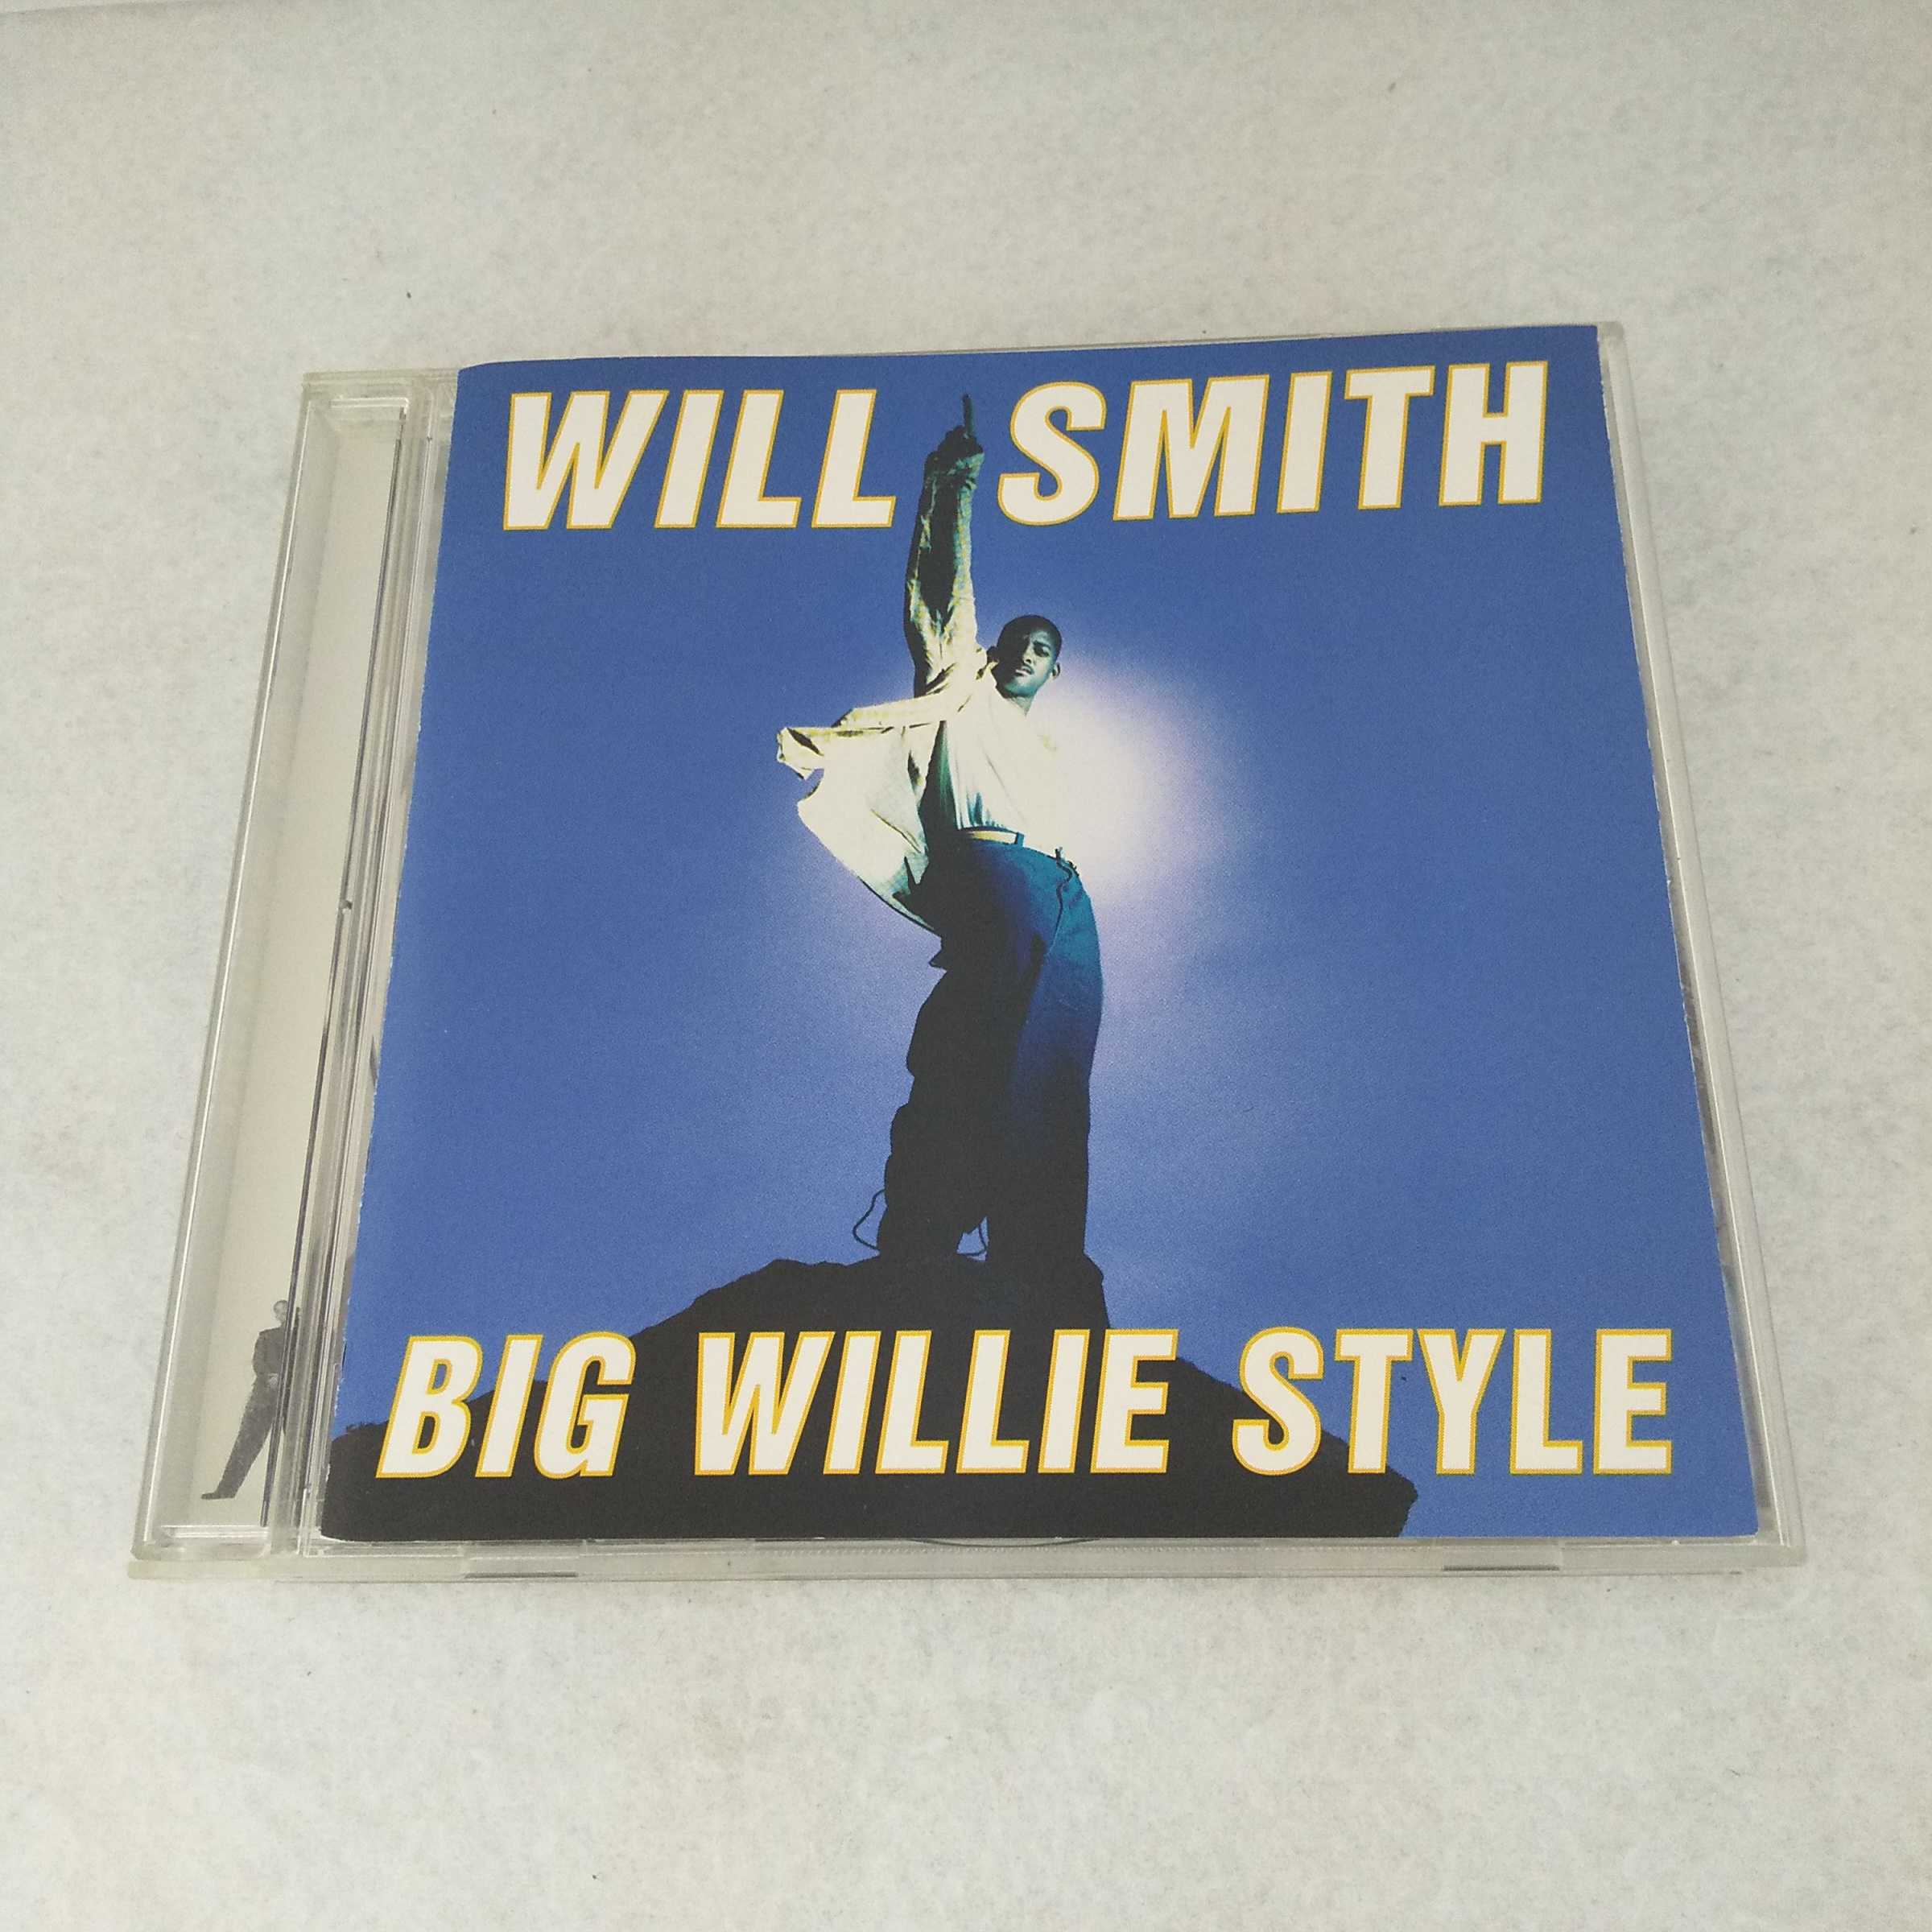 AC09416 š CD BIG WILLIE STYLE/WILL SMITH